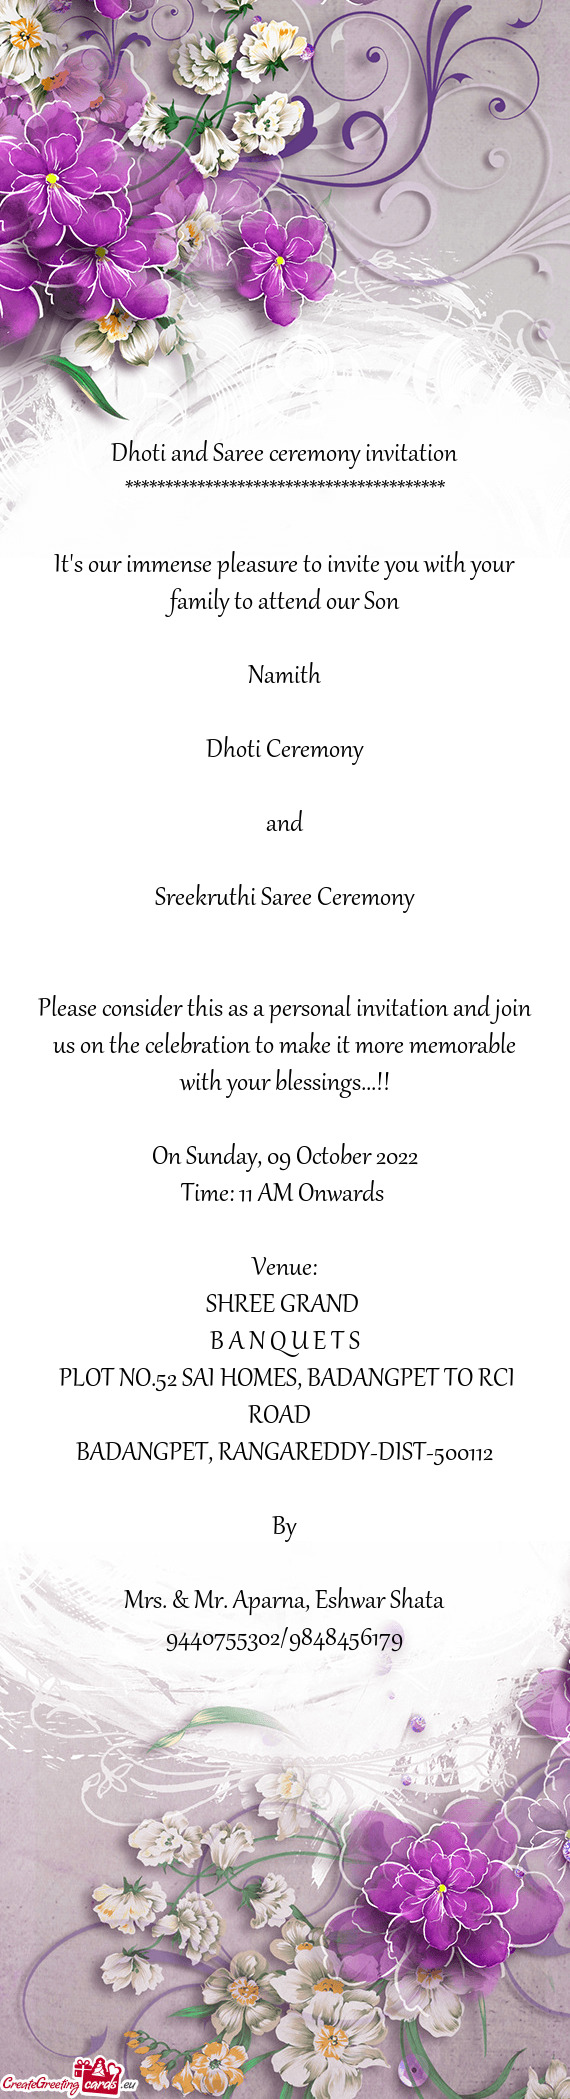 Sreekruthi Saree Ceremony